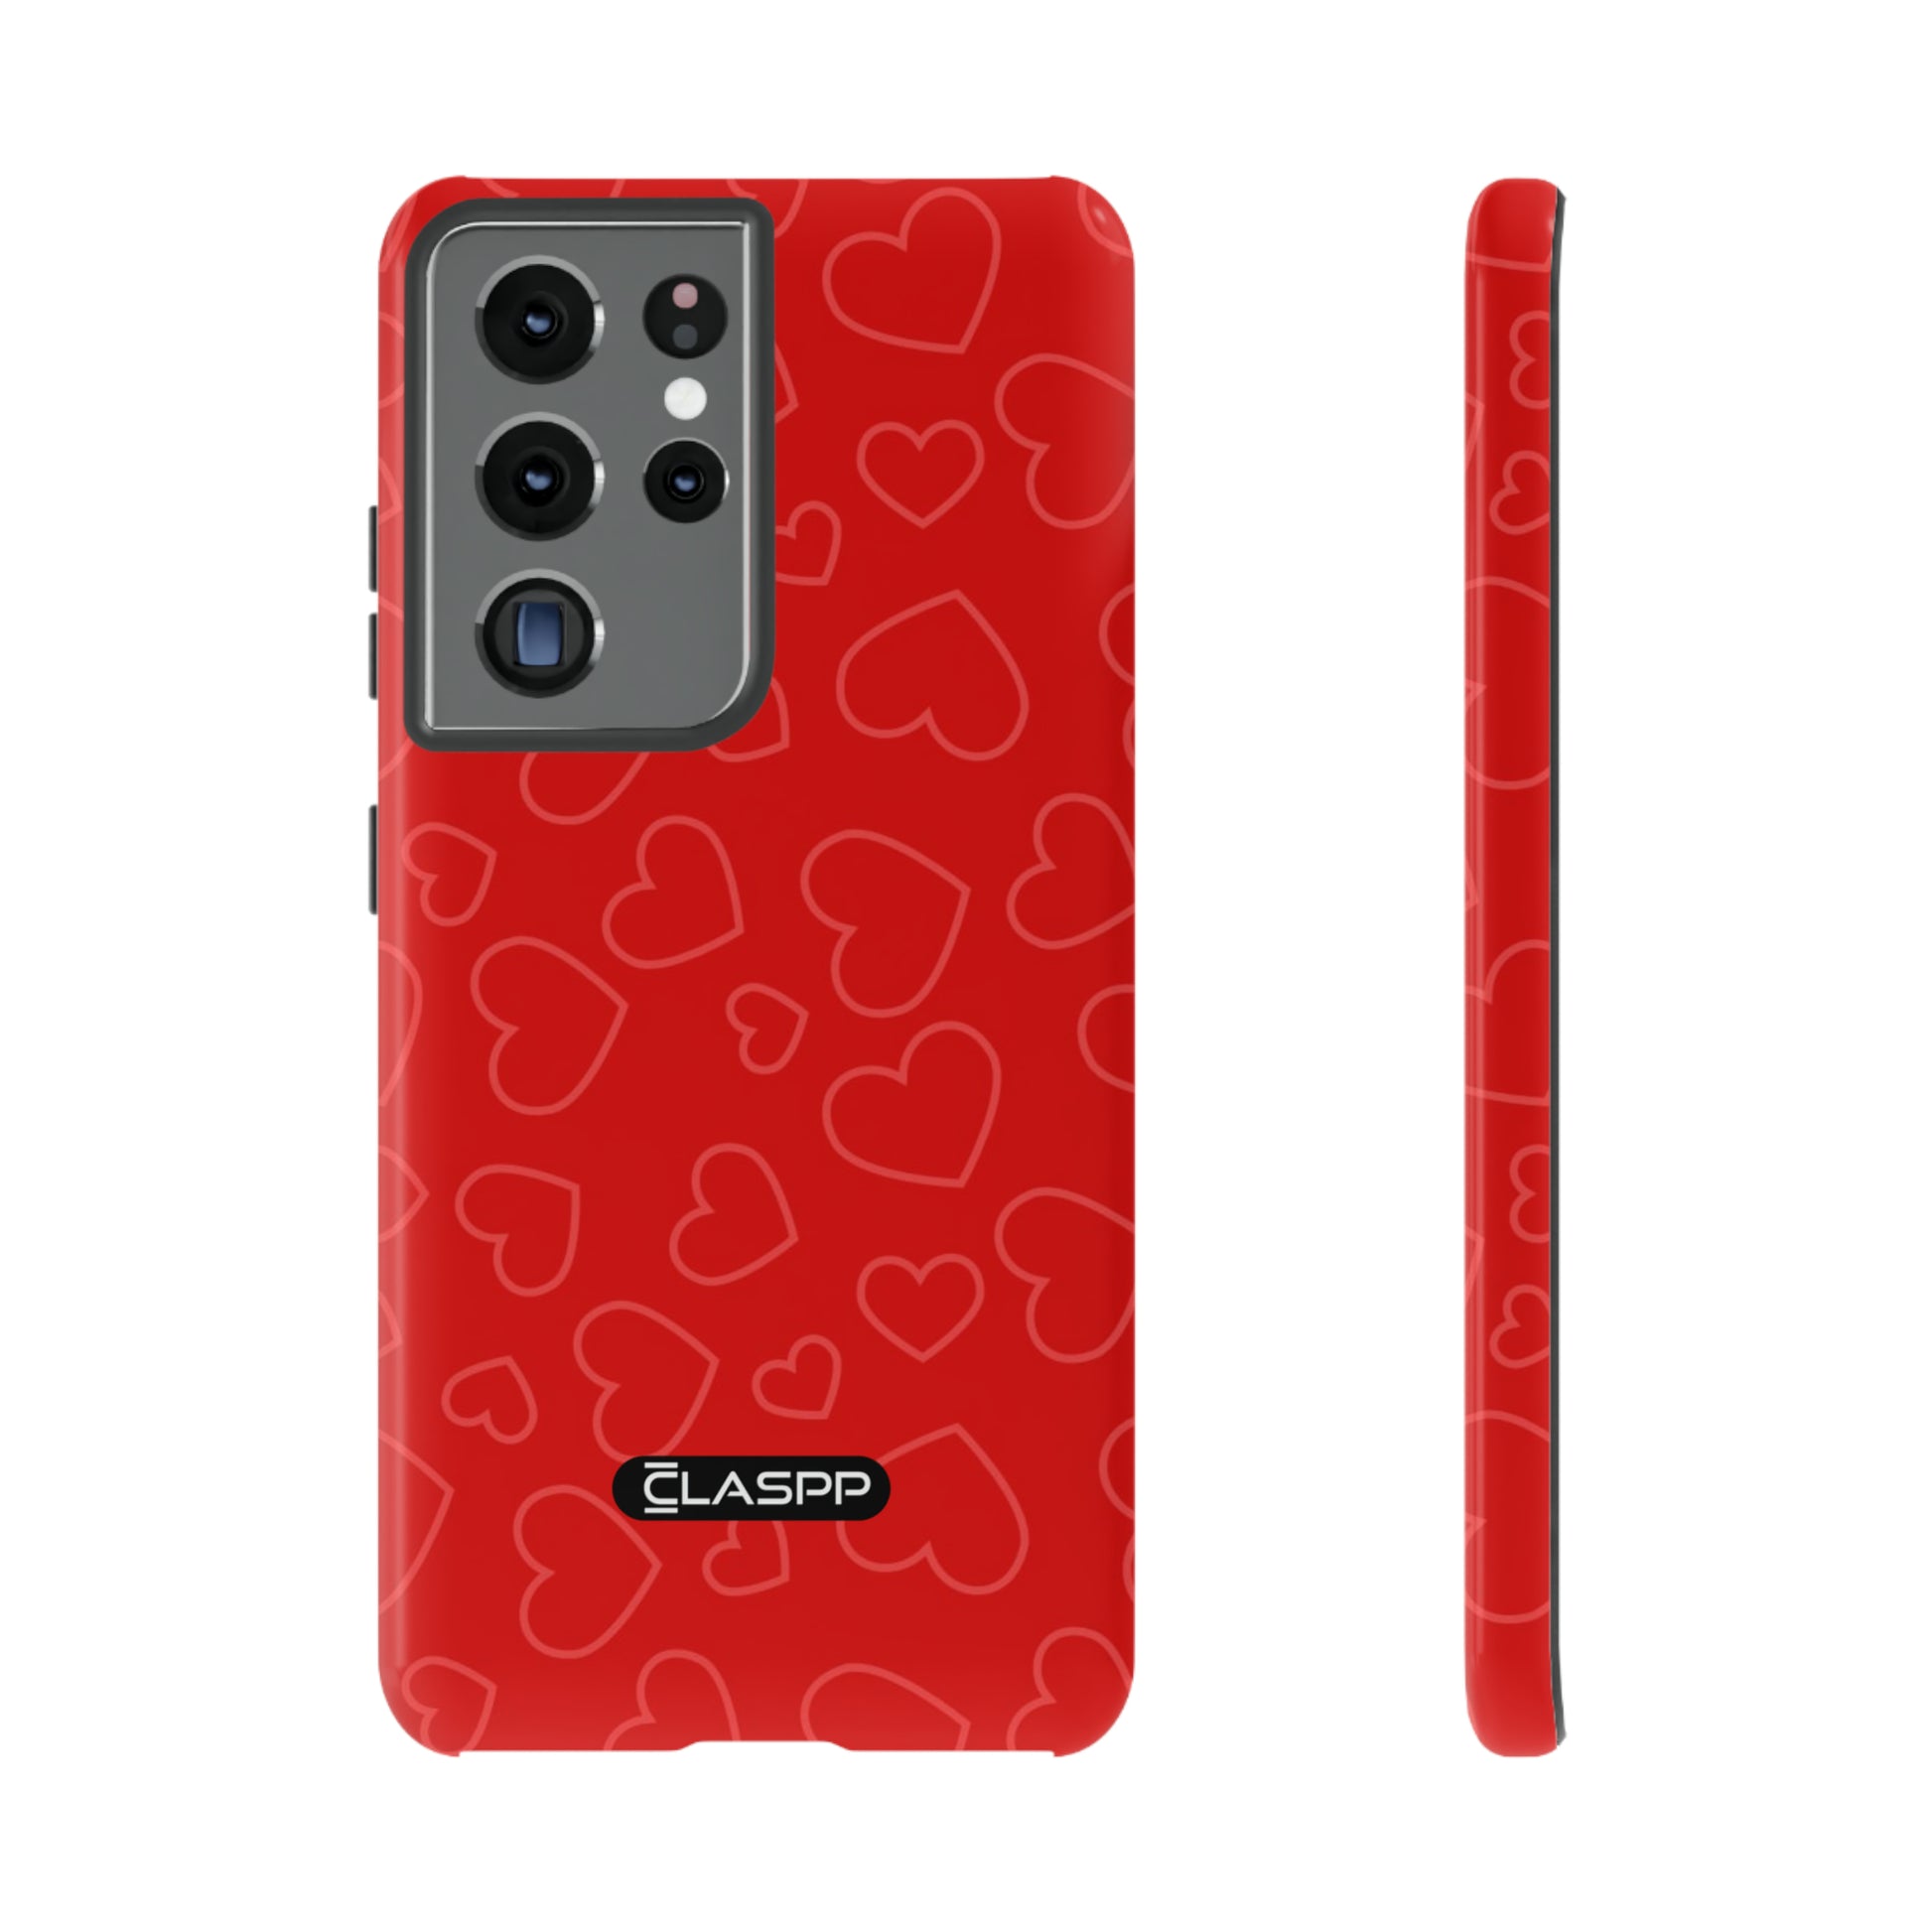 Samsung Galaxy S21 ultra Amora Valentine's Day phone case